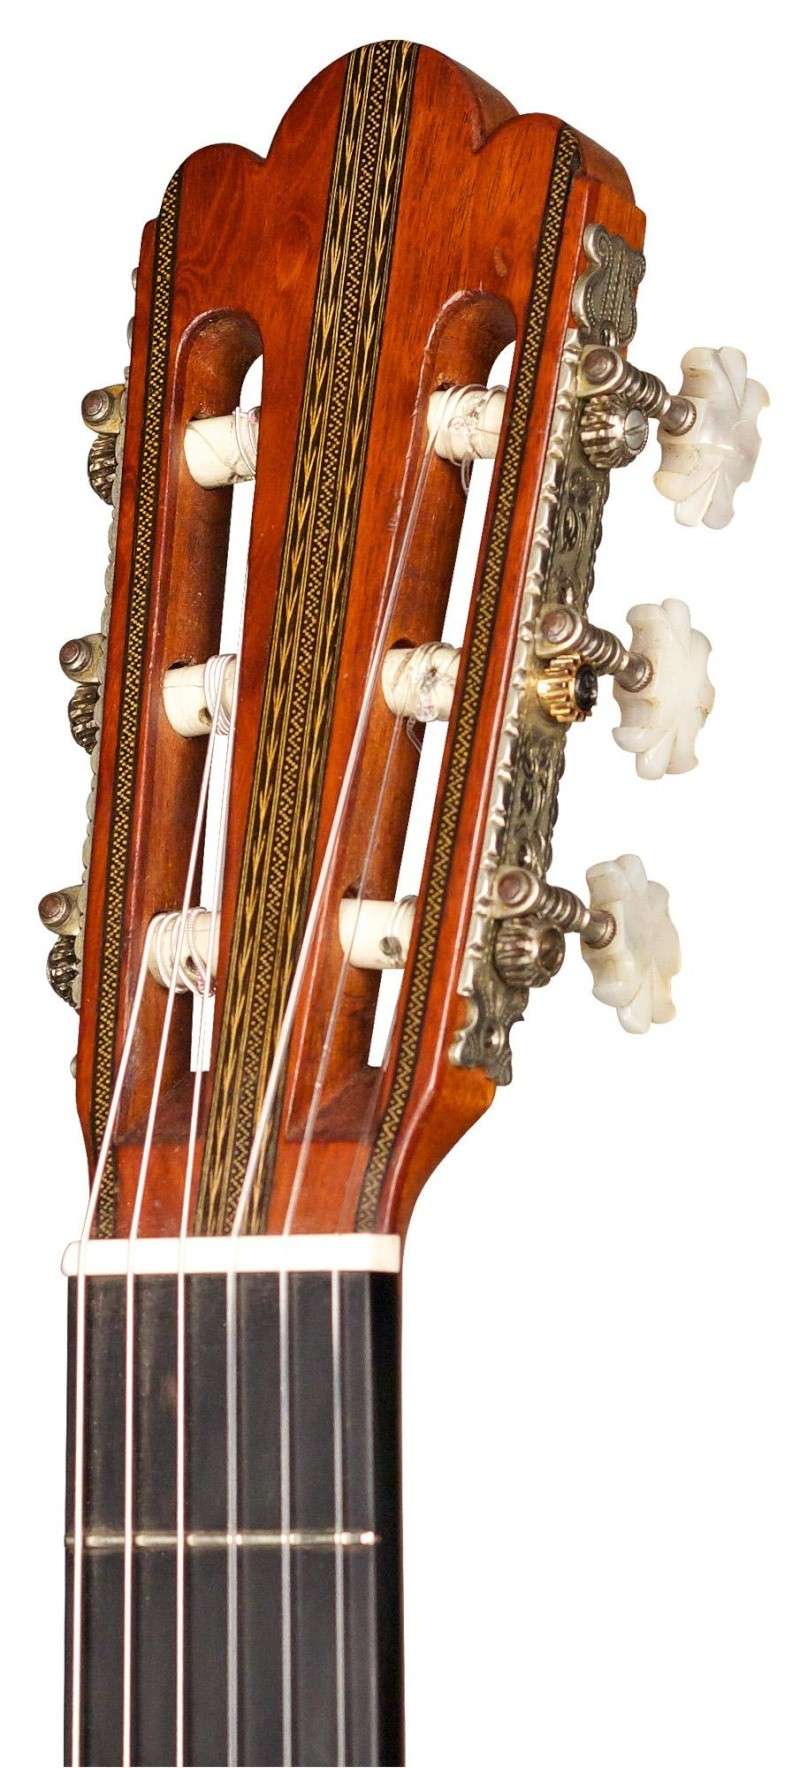  Guitares Réplica ANTONIO de TORRES et SELMER Réplica par LAURENT (Coligny ) A0f7df12